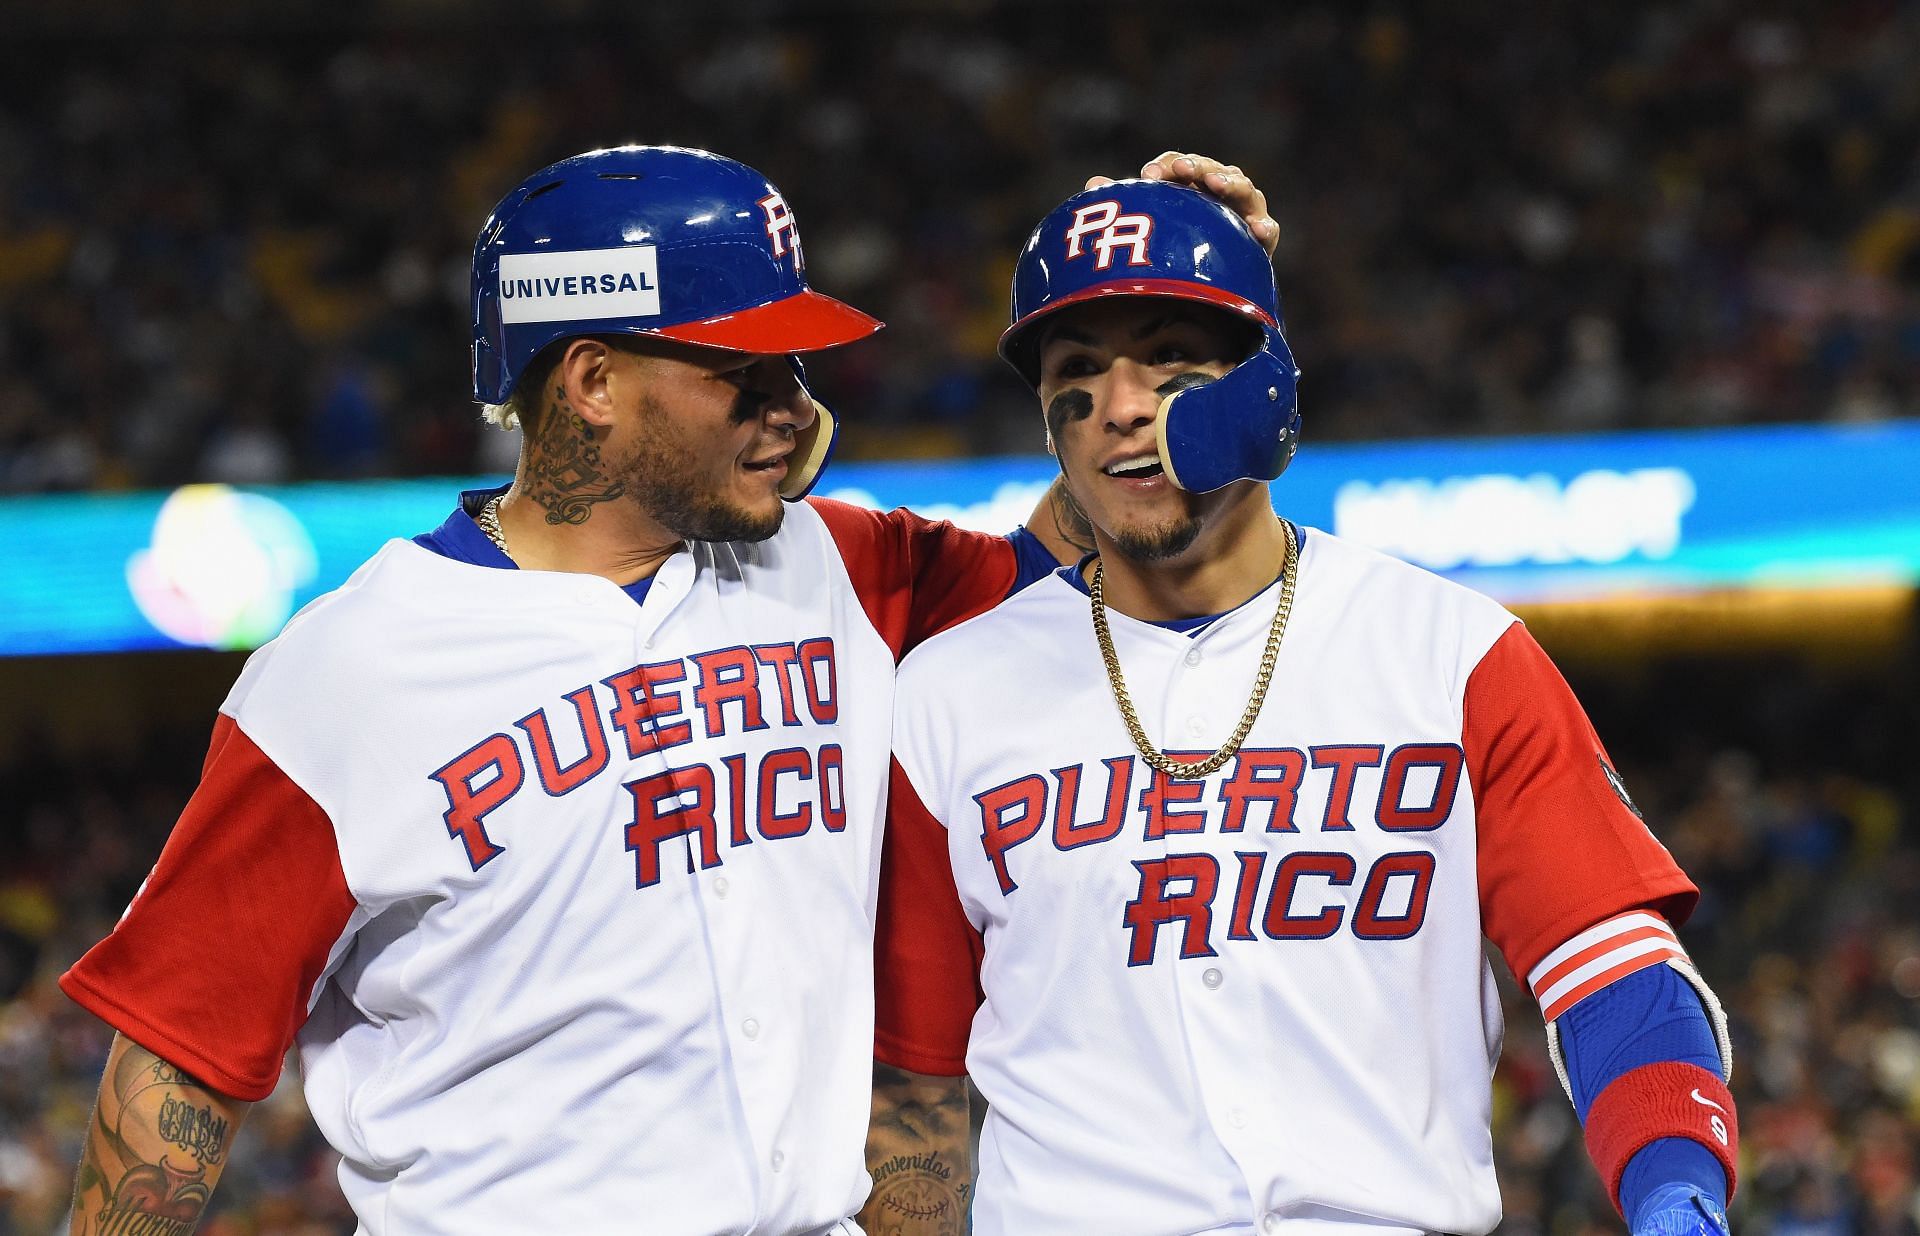 2023 Puerto Rico World Baseball Classic Roster — College Baseball